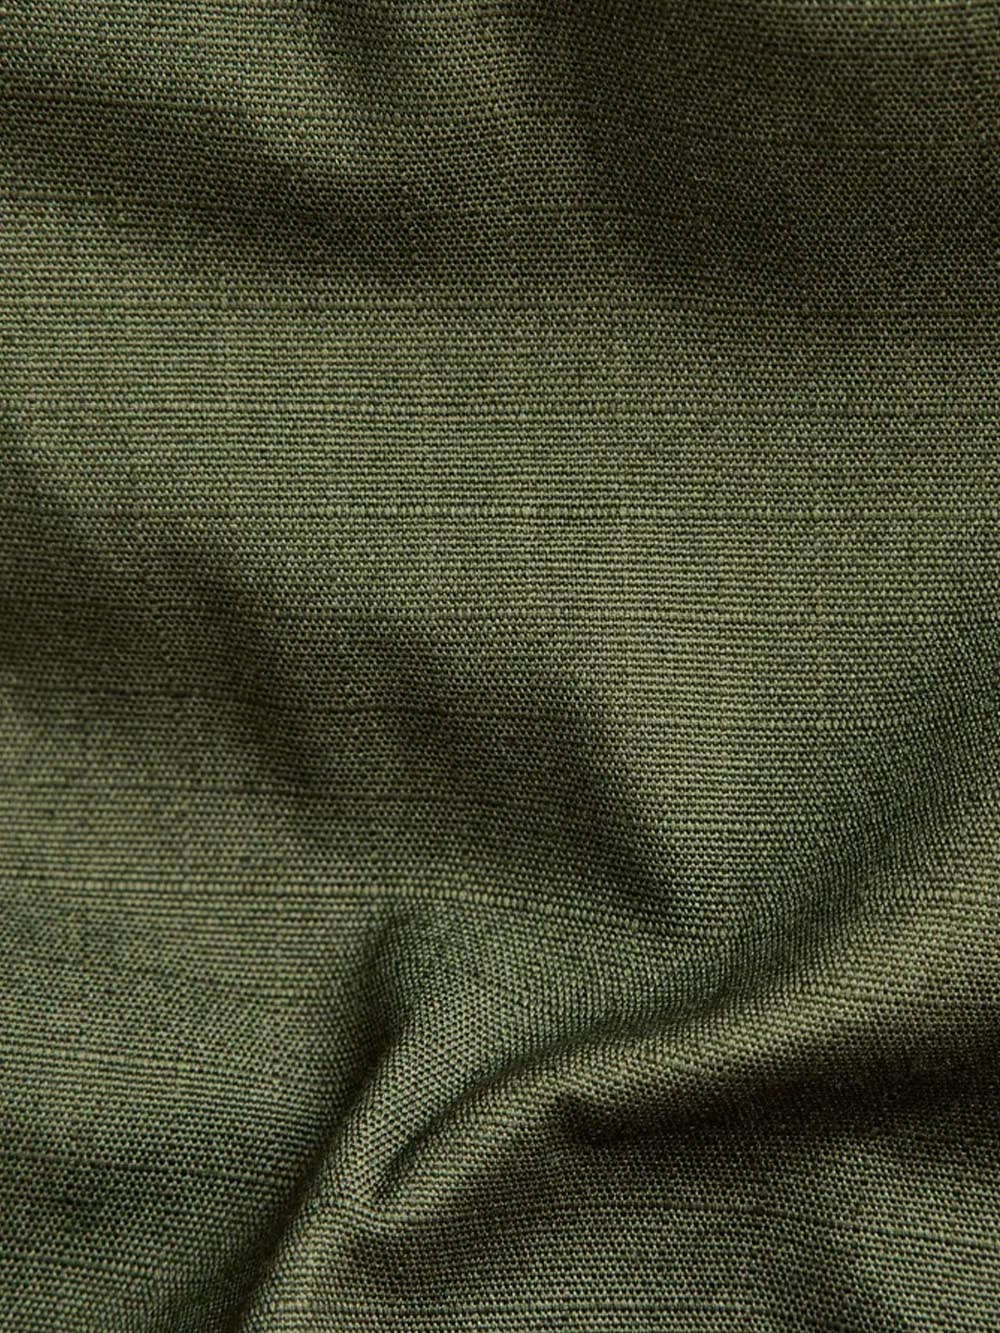 G-Star Camicia Uomo Verde oliva